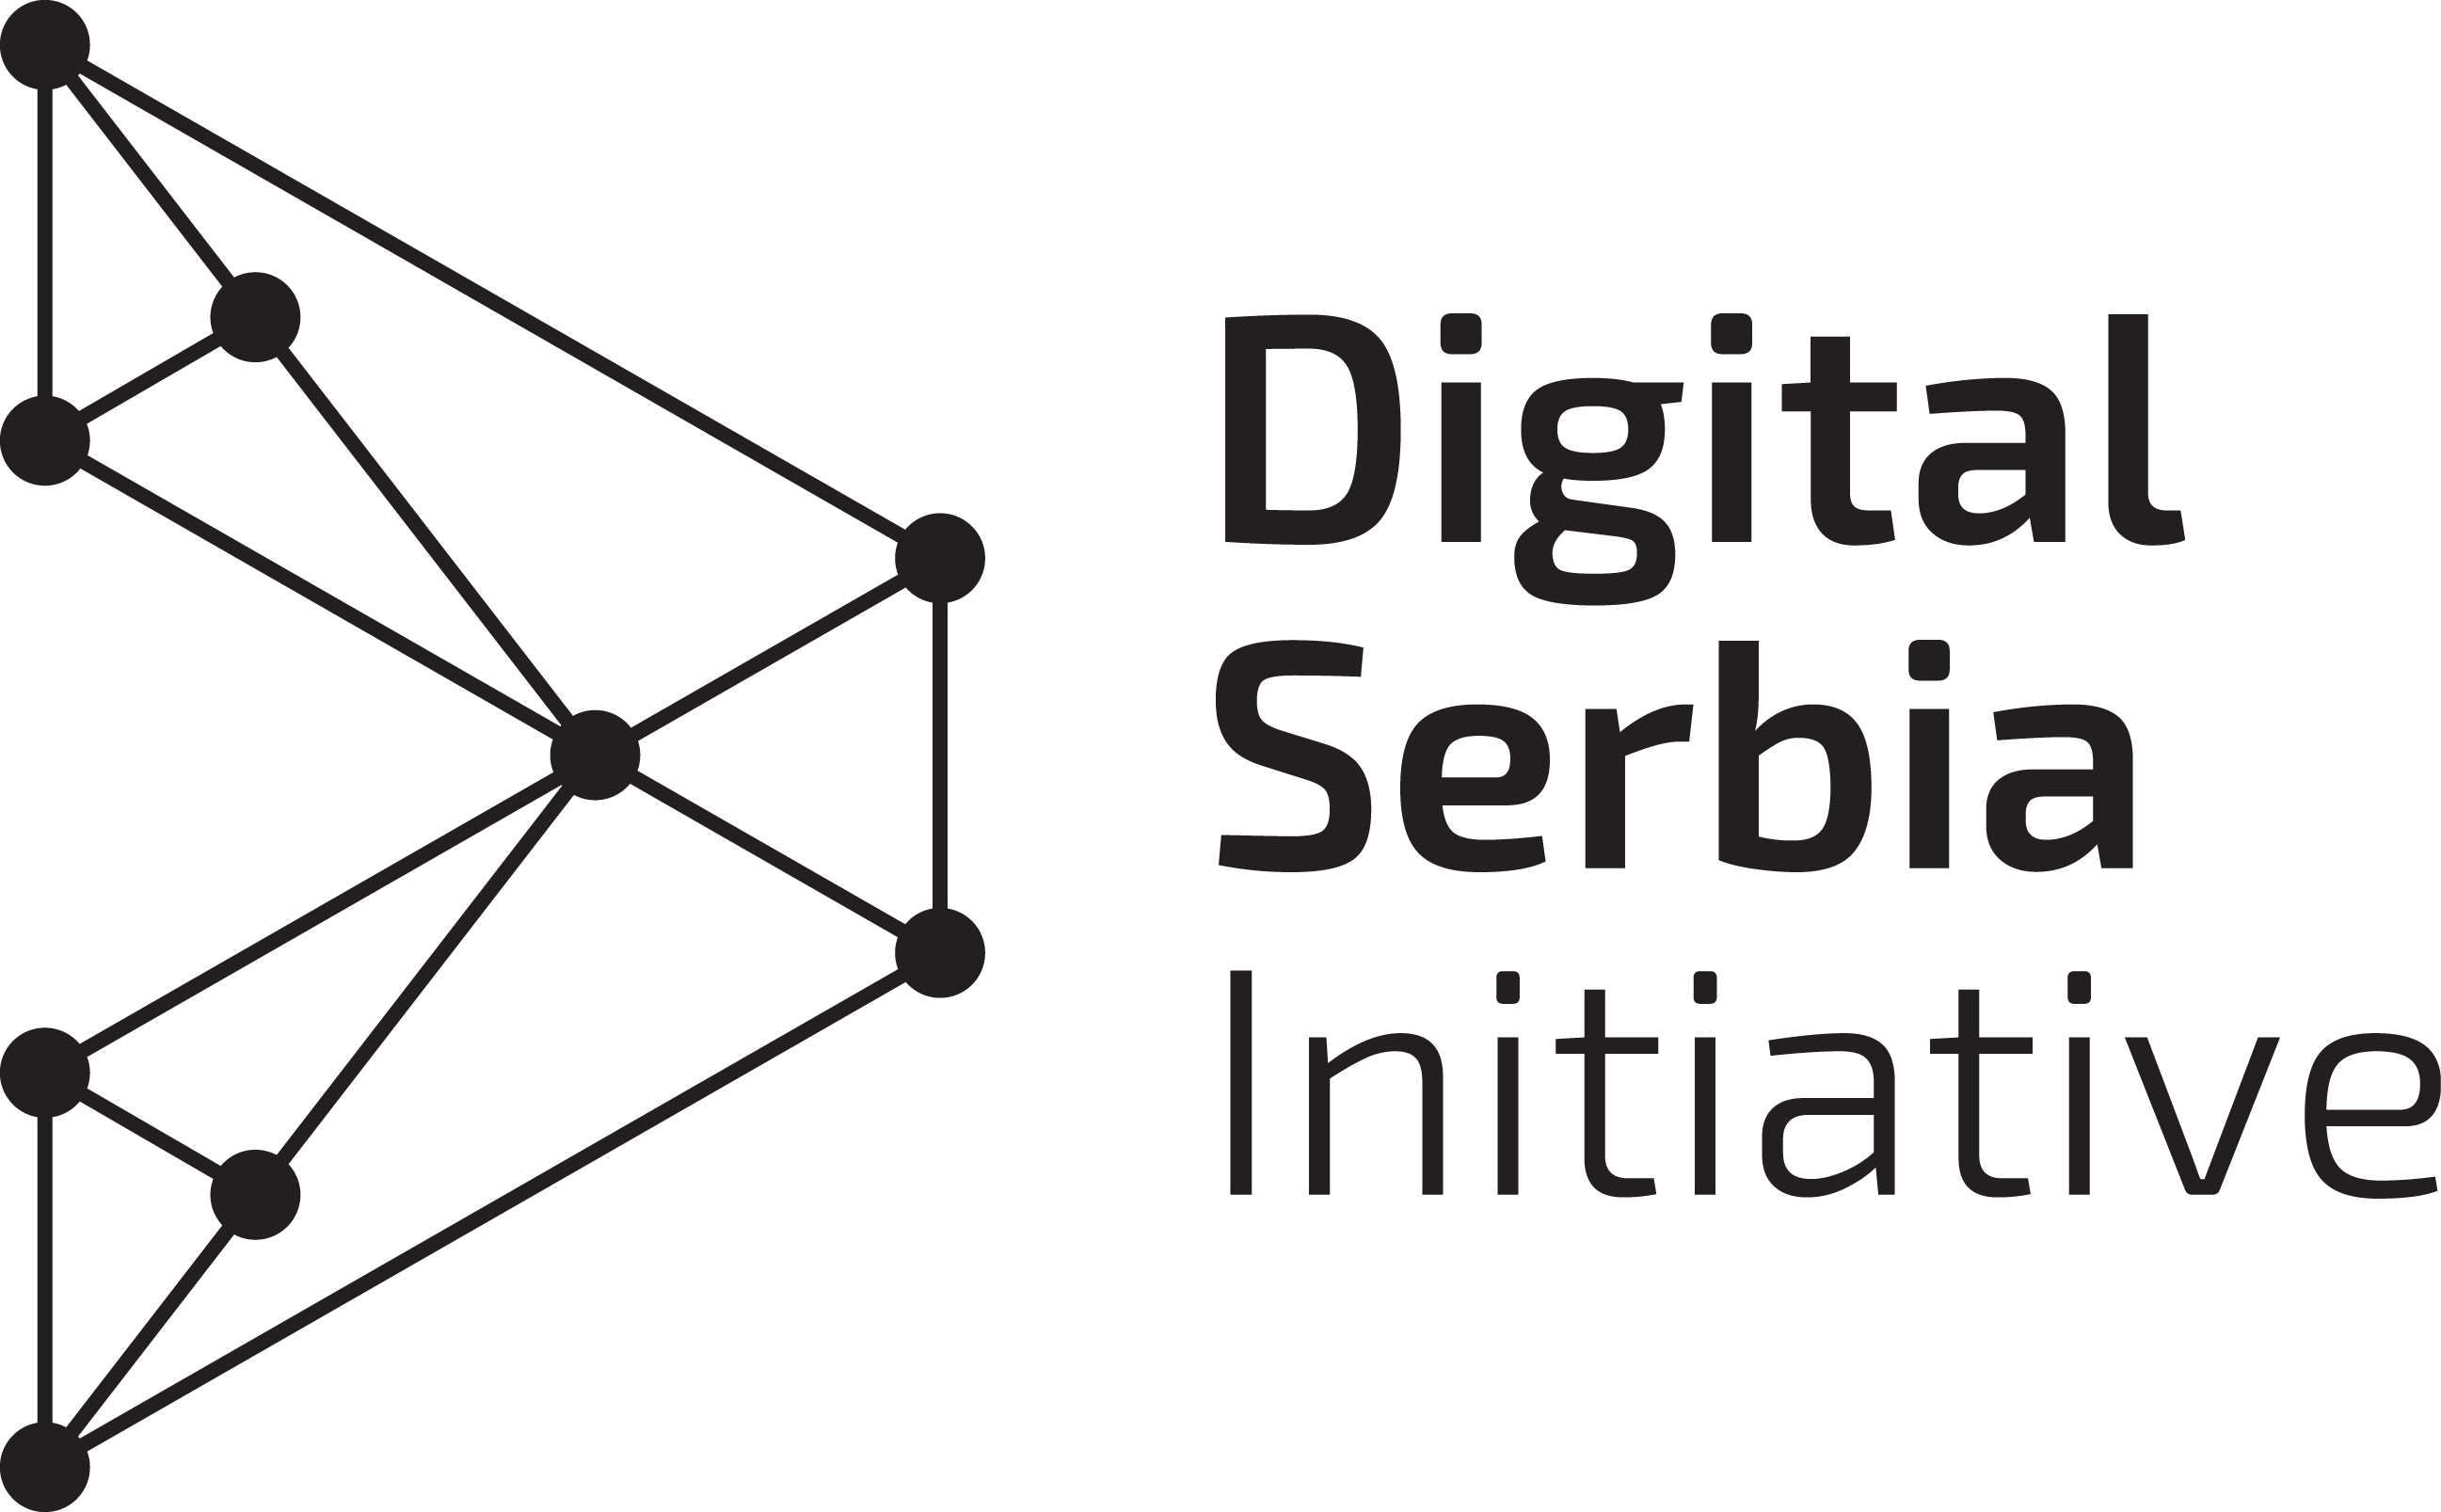 Digital Serbia initiative logo